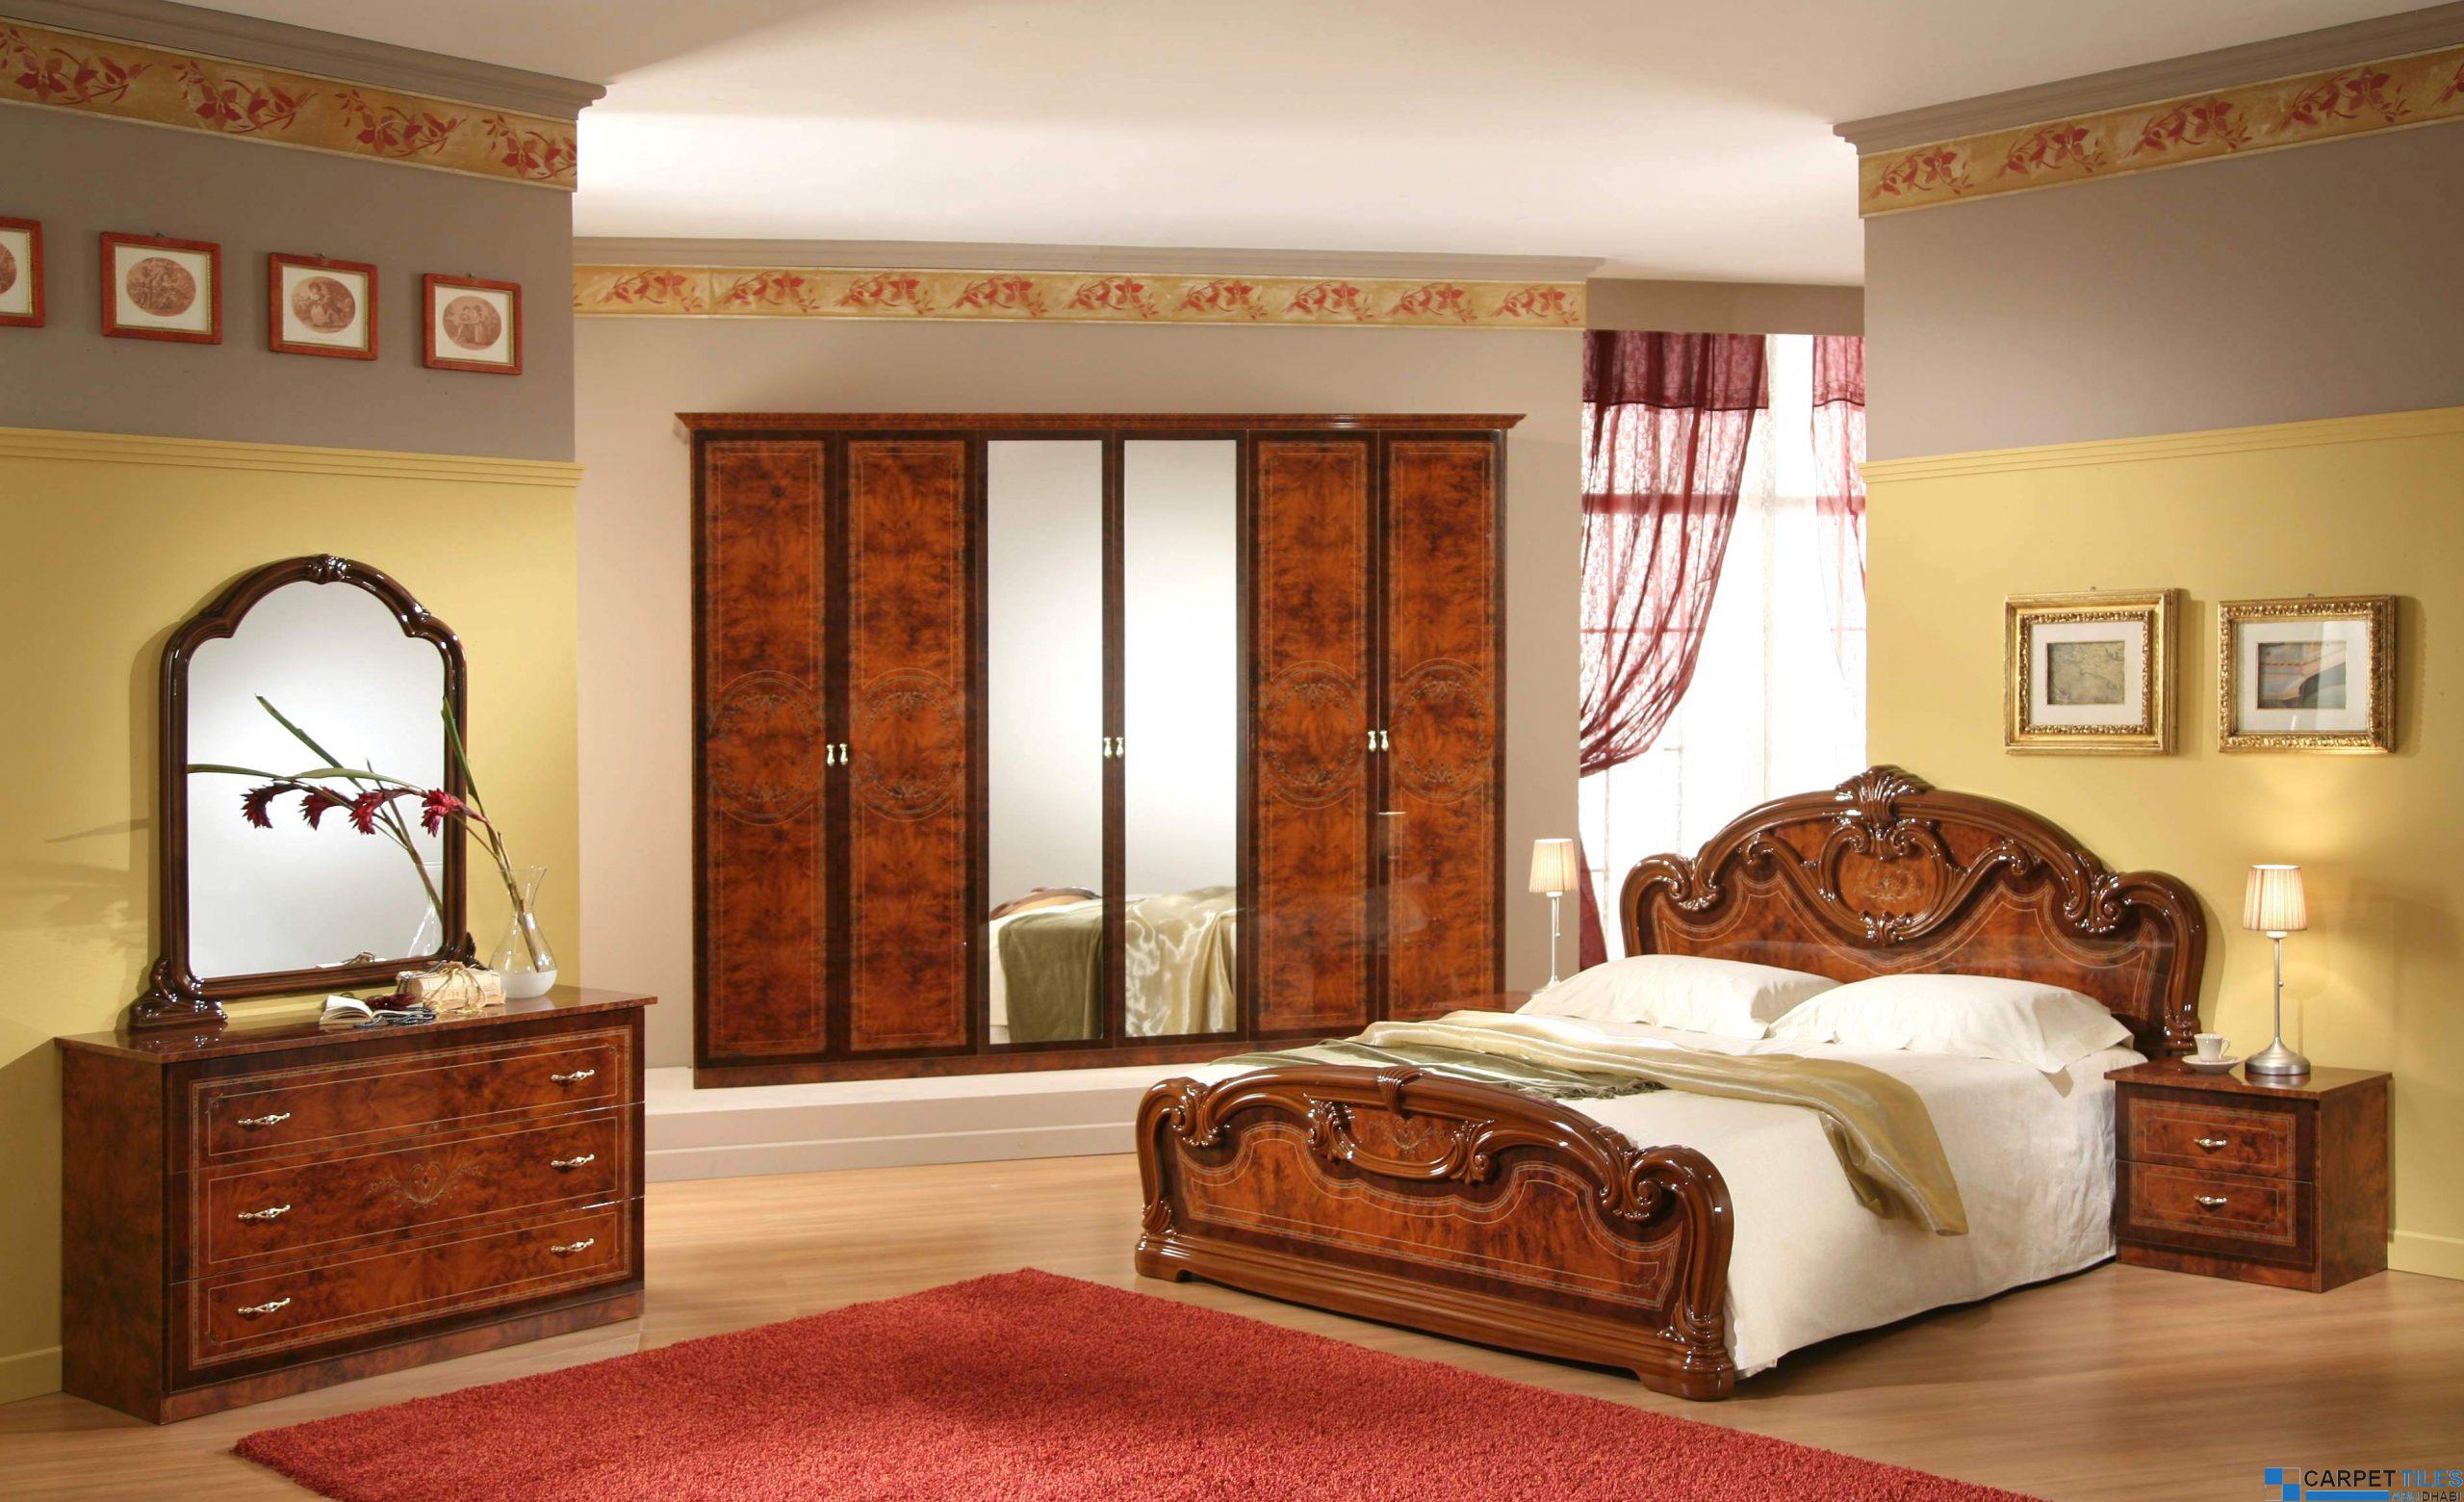 Furniture Polish Dubai - CARPET TILES ABU DHABI